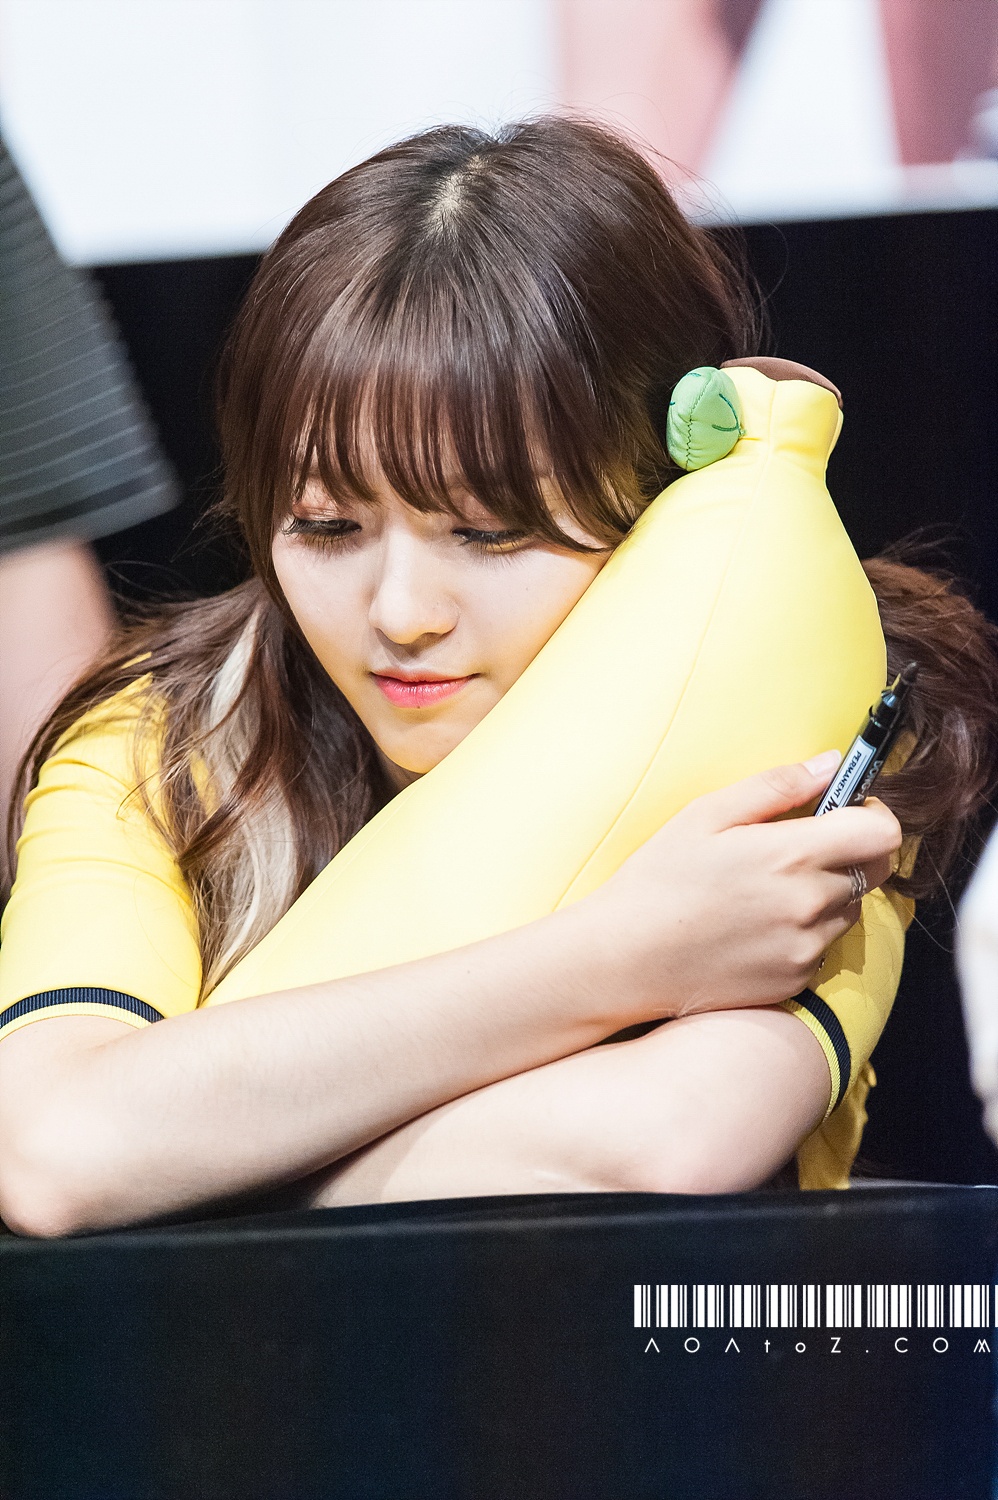 Chanmi cuddling a banana